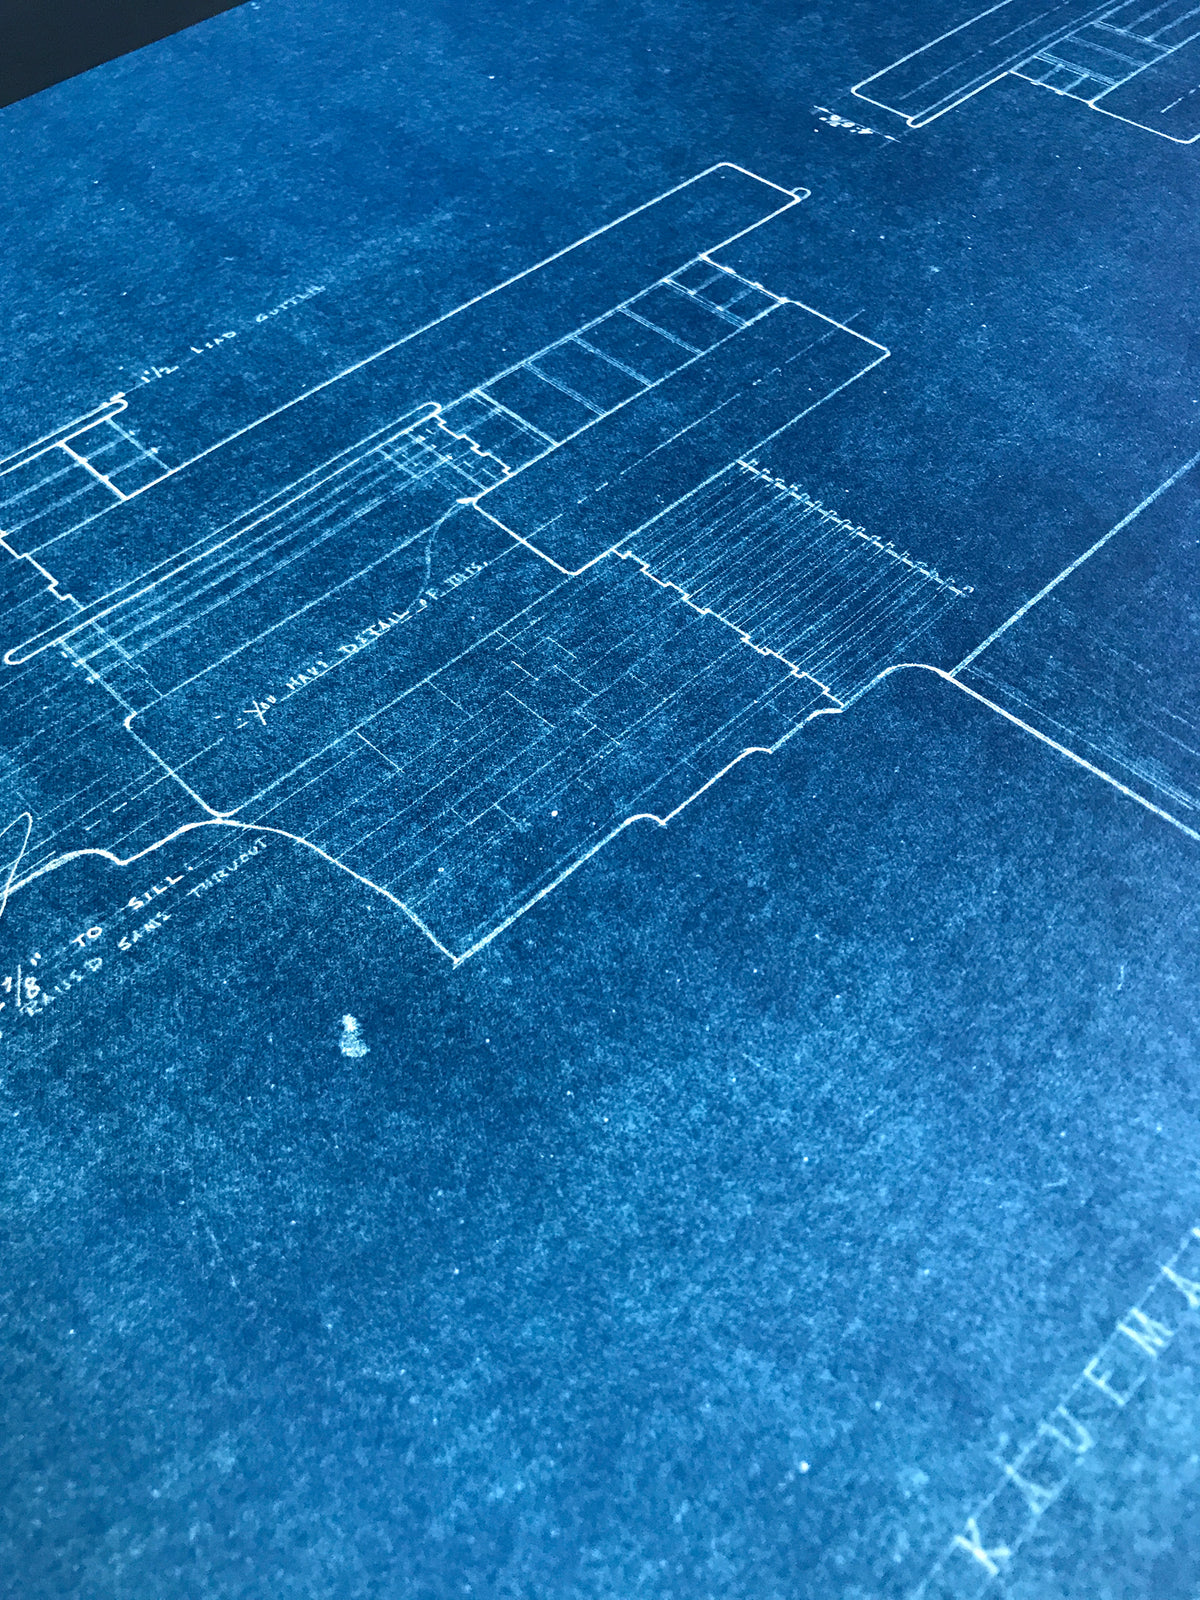 Frank Lloyd Wright - Original &#39;Fallingwater&#39; Working Blueprint